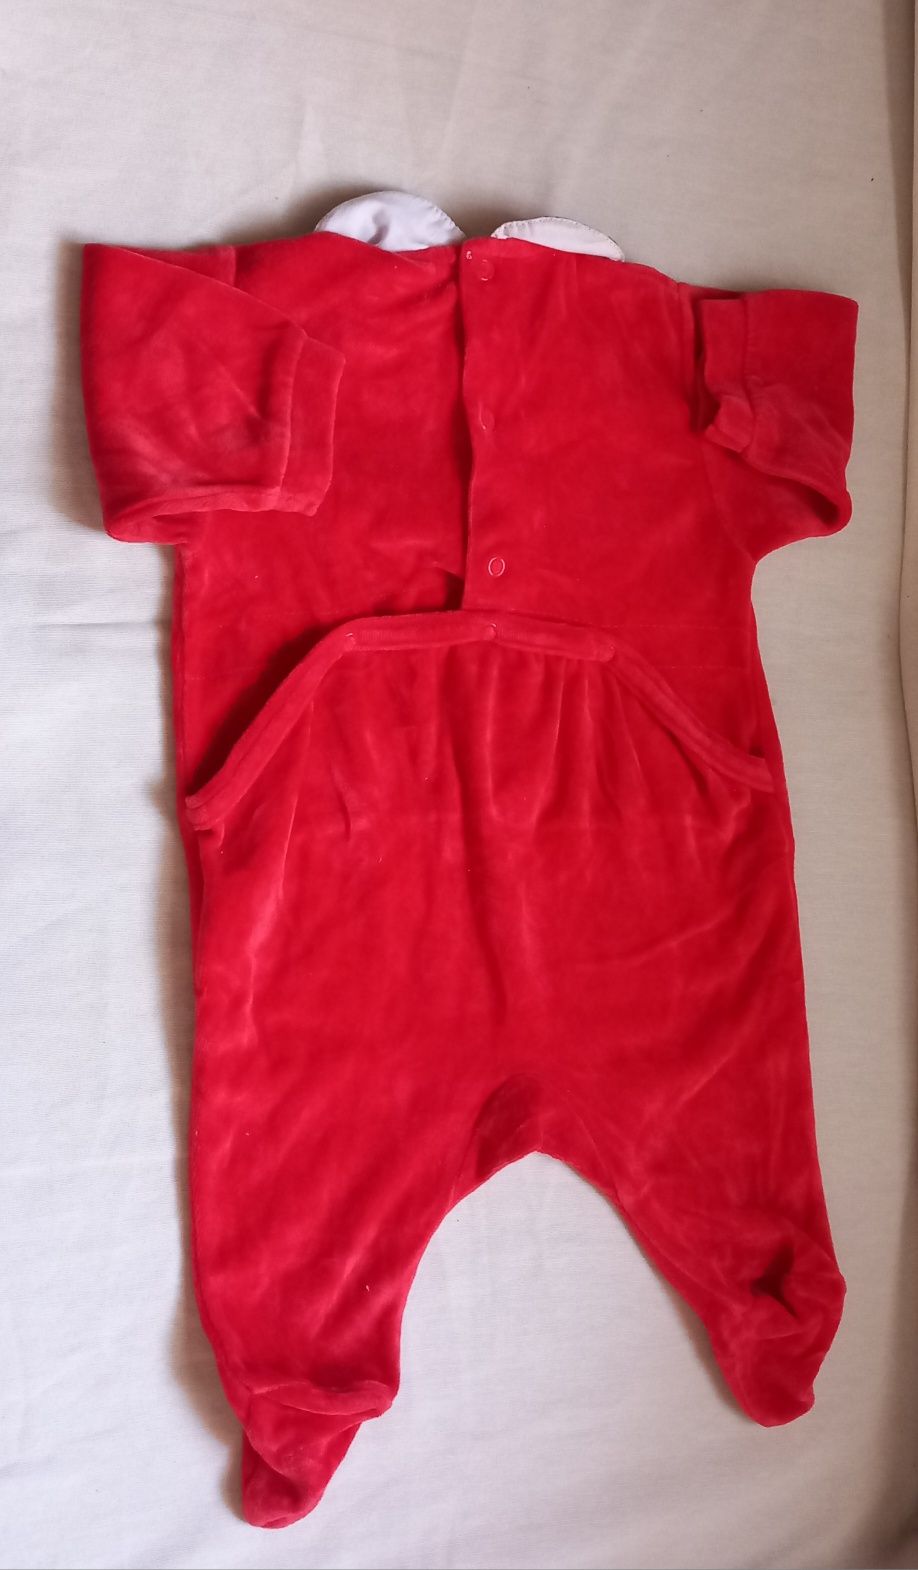 Babygrow vermelho, tamanho 3meses 4€